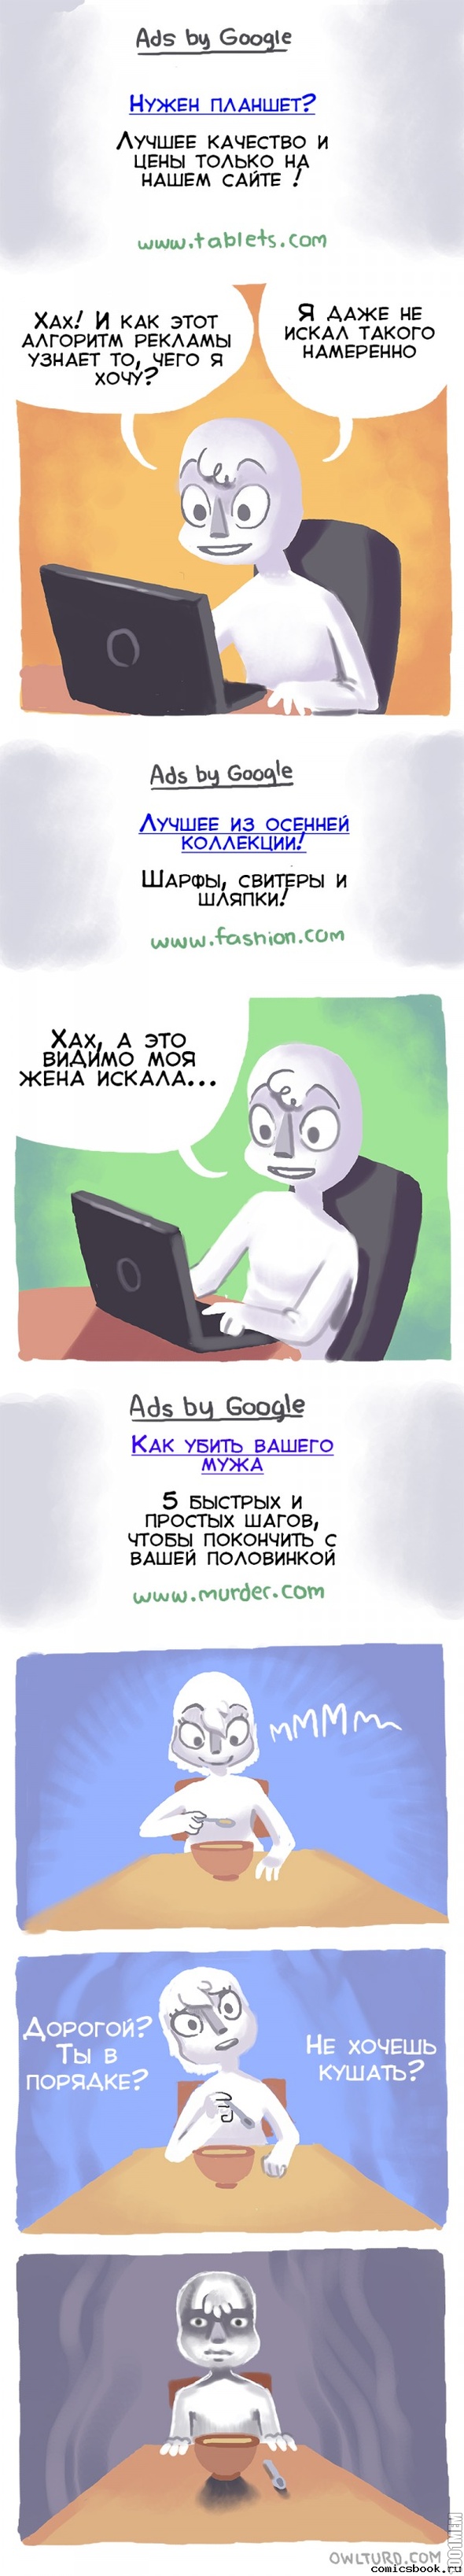 Google's ads